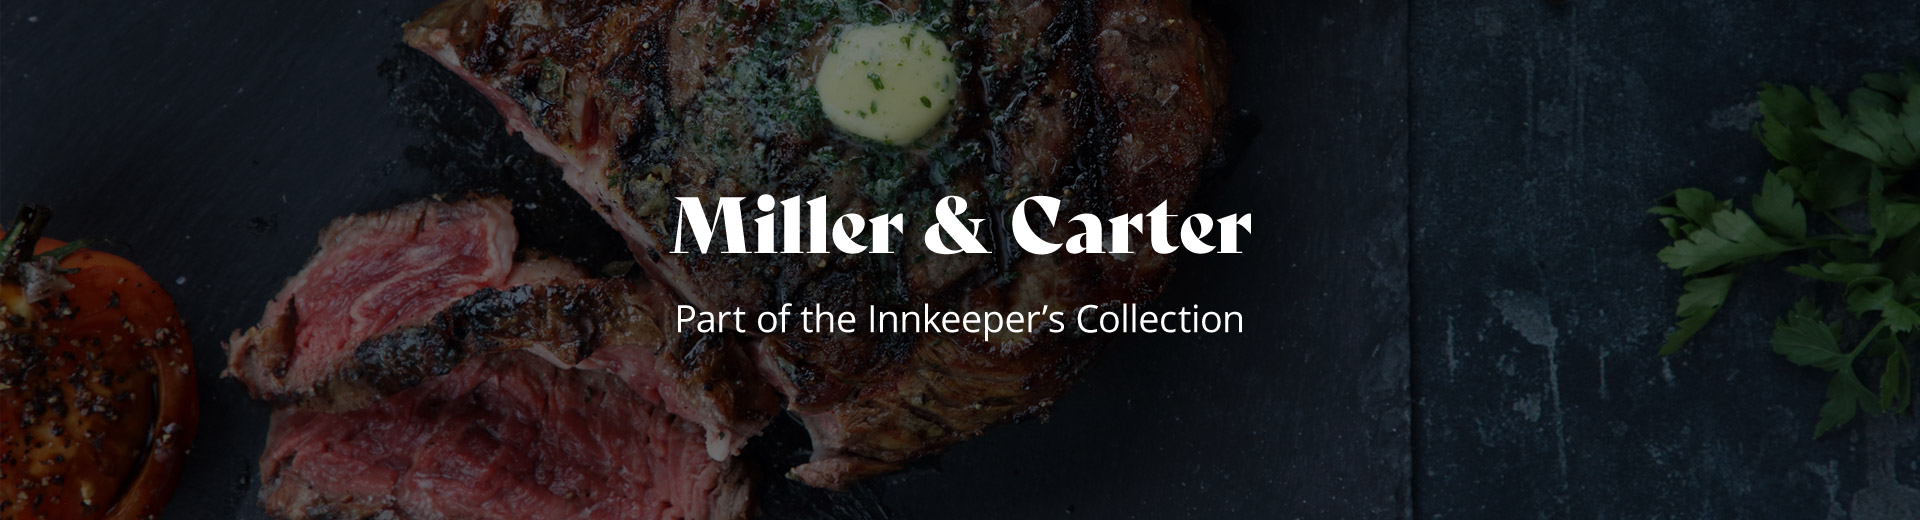 Food and Drink at Miller & Carter Steakhouse